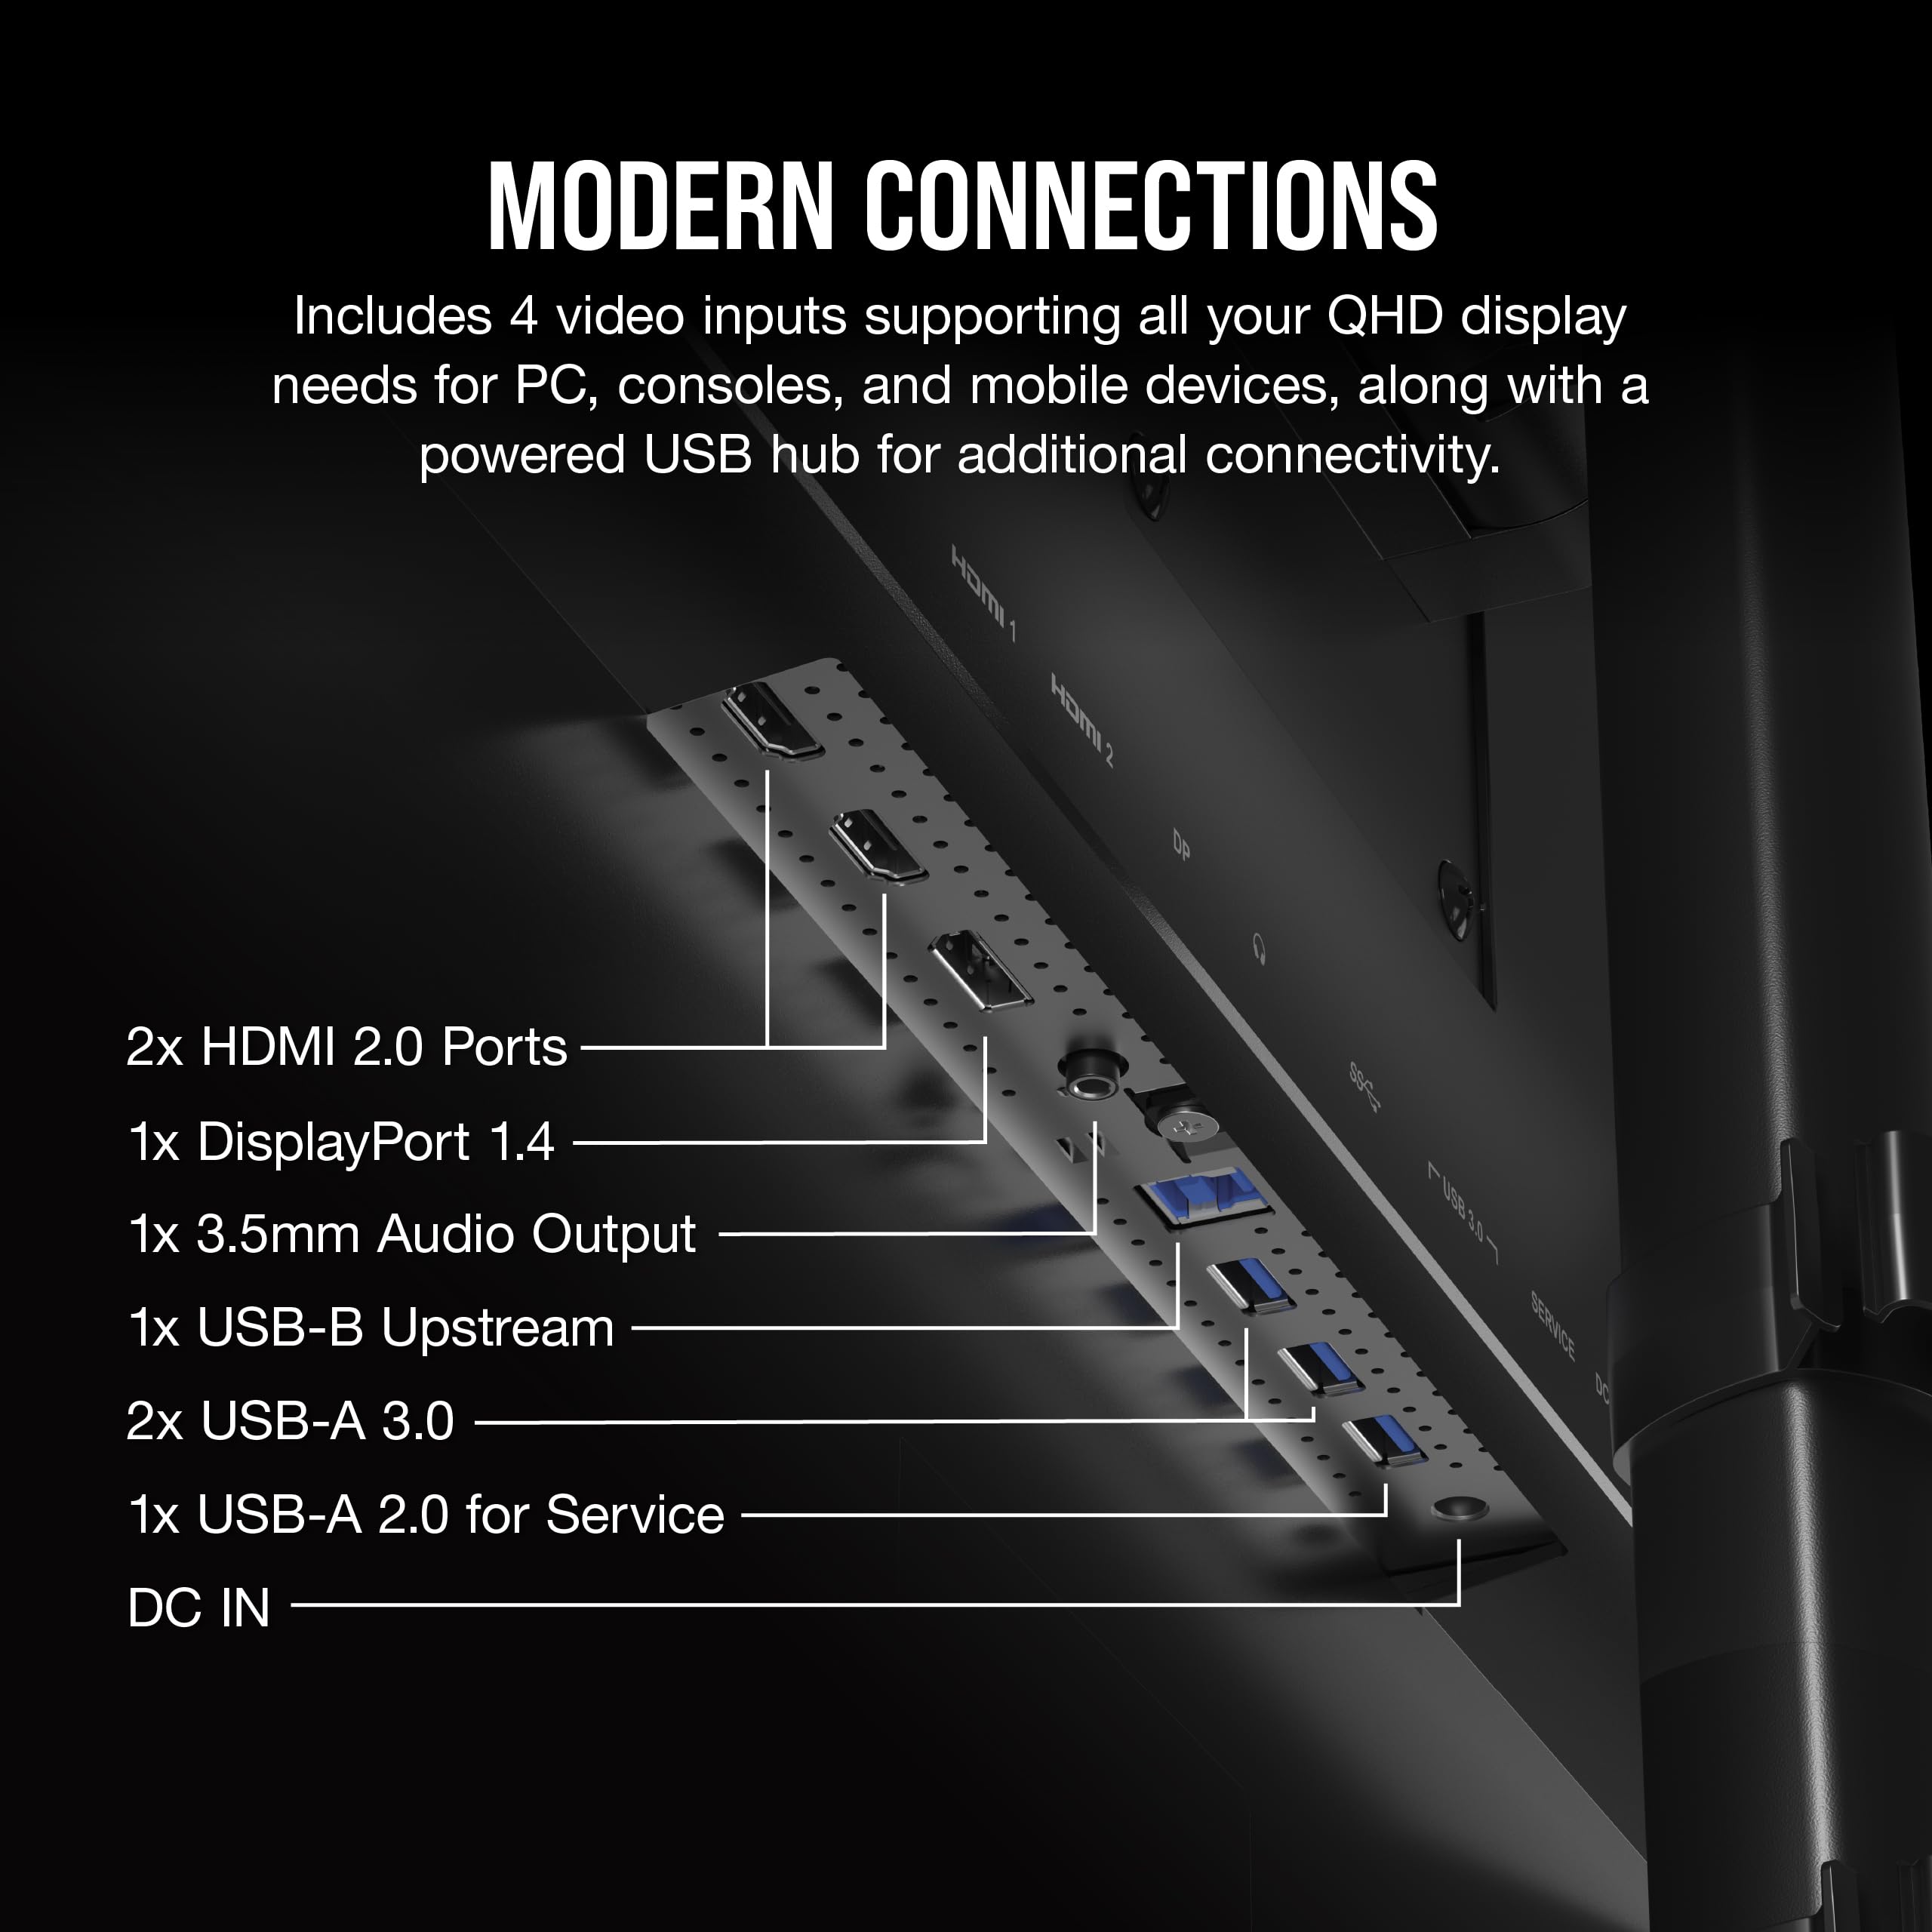 Corsair XENEON 315QHD165 32-Inch QHD IPS Gaming Monitor – 2560 x 1440, 165Hz, 1ms, NVIDIA G-SYNC Compatible, AMD FreeSync Premium, HDR-Ready, DisplayPort 1.4, HDMI 2.0, USB 3.0 – Black